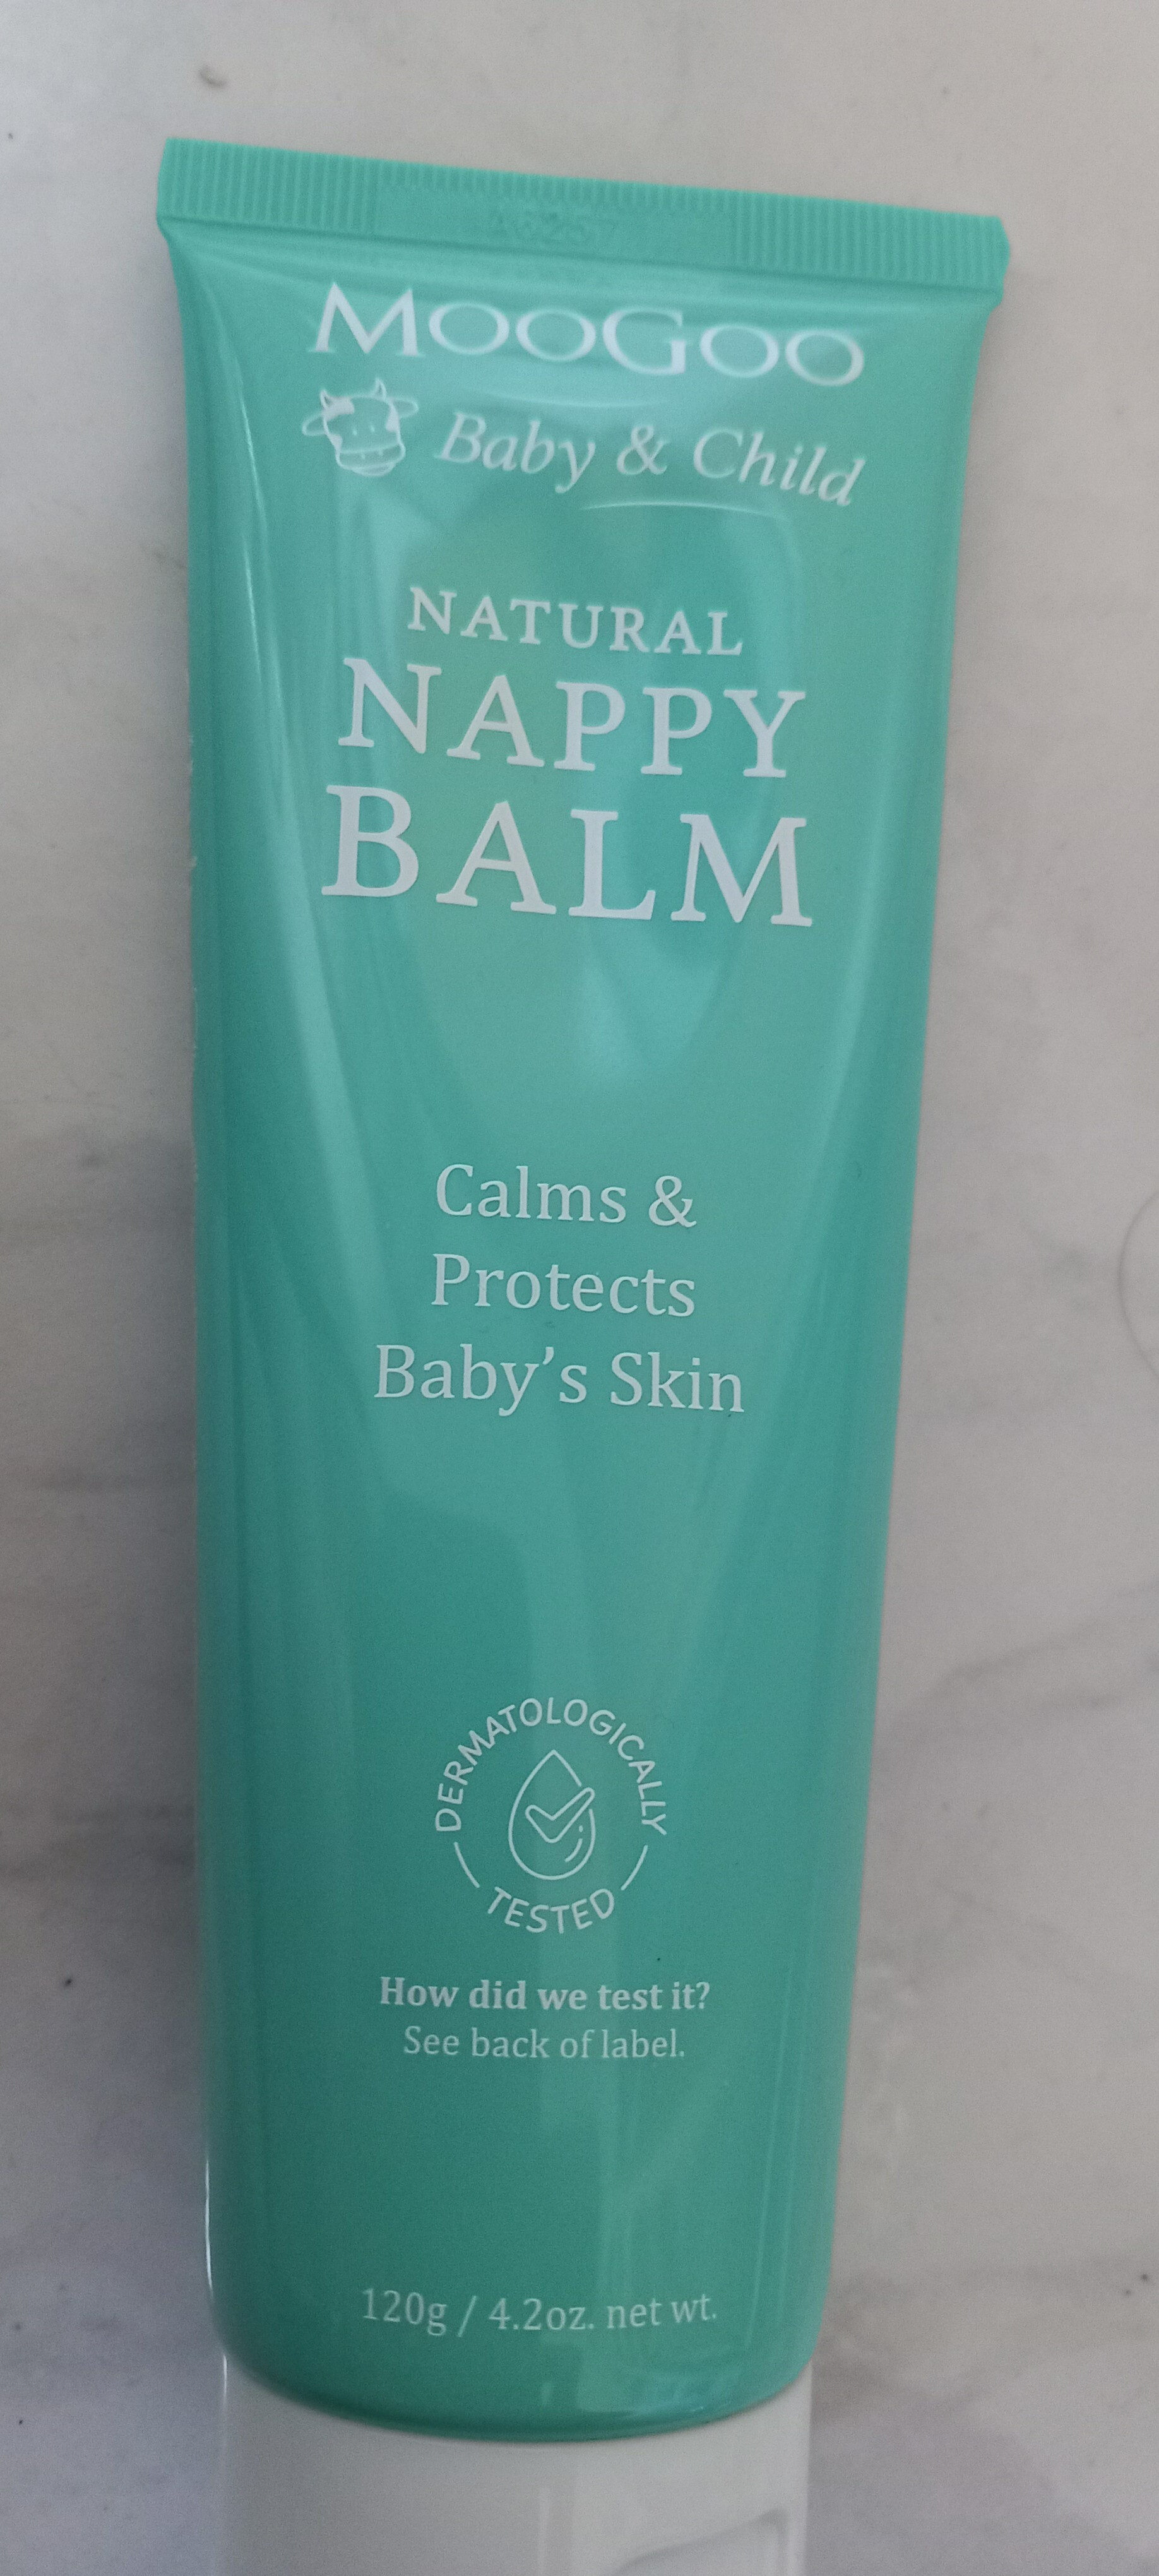 natural nappy balm - Product - en